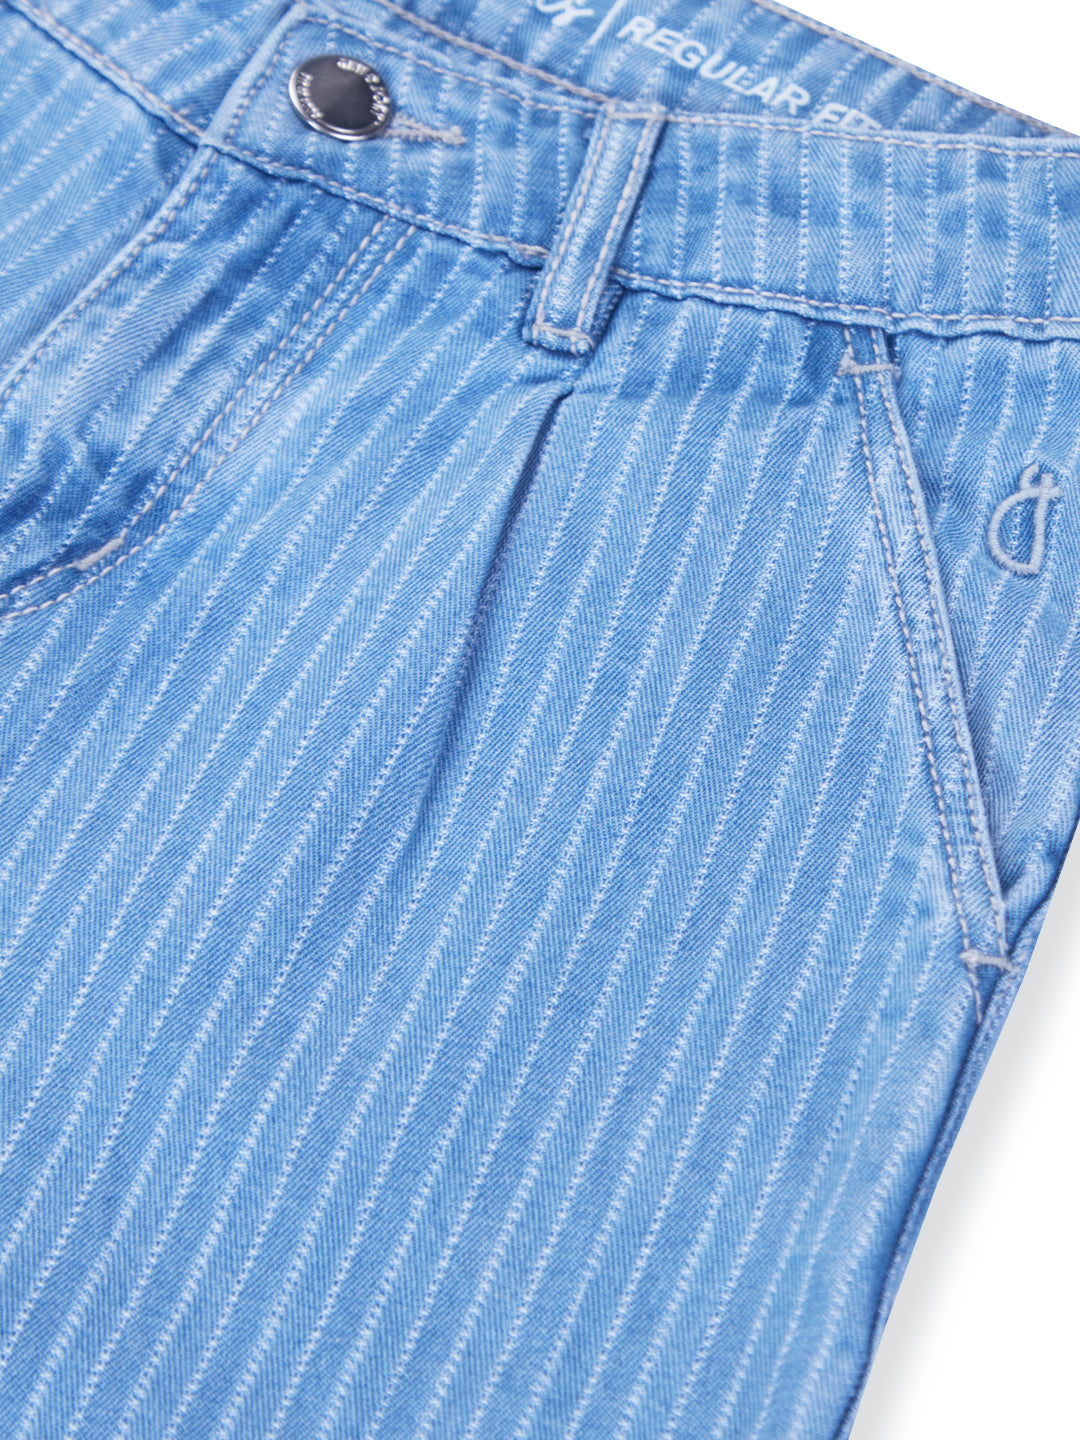 Girls blue denim striped culotte pants